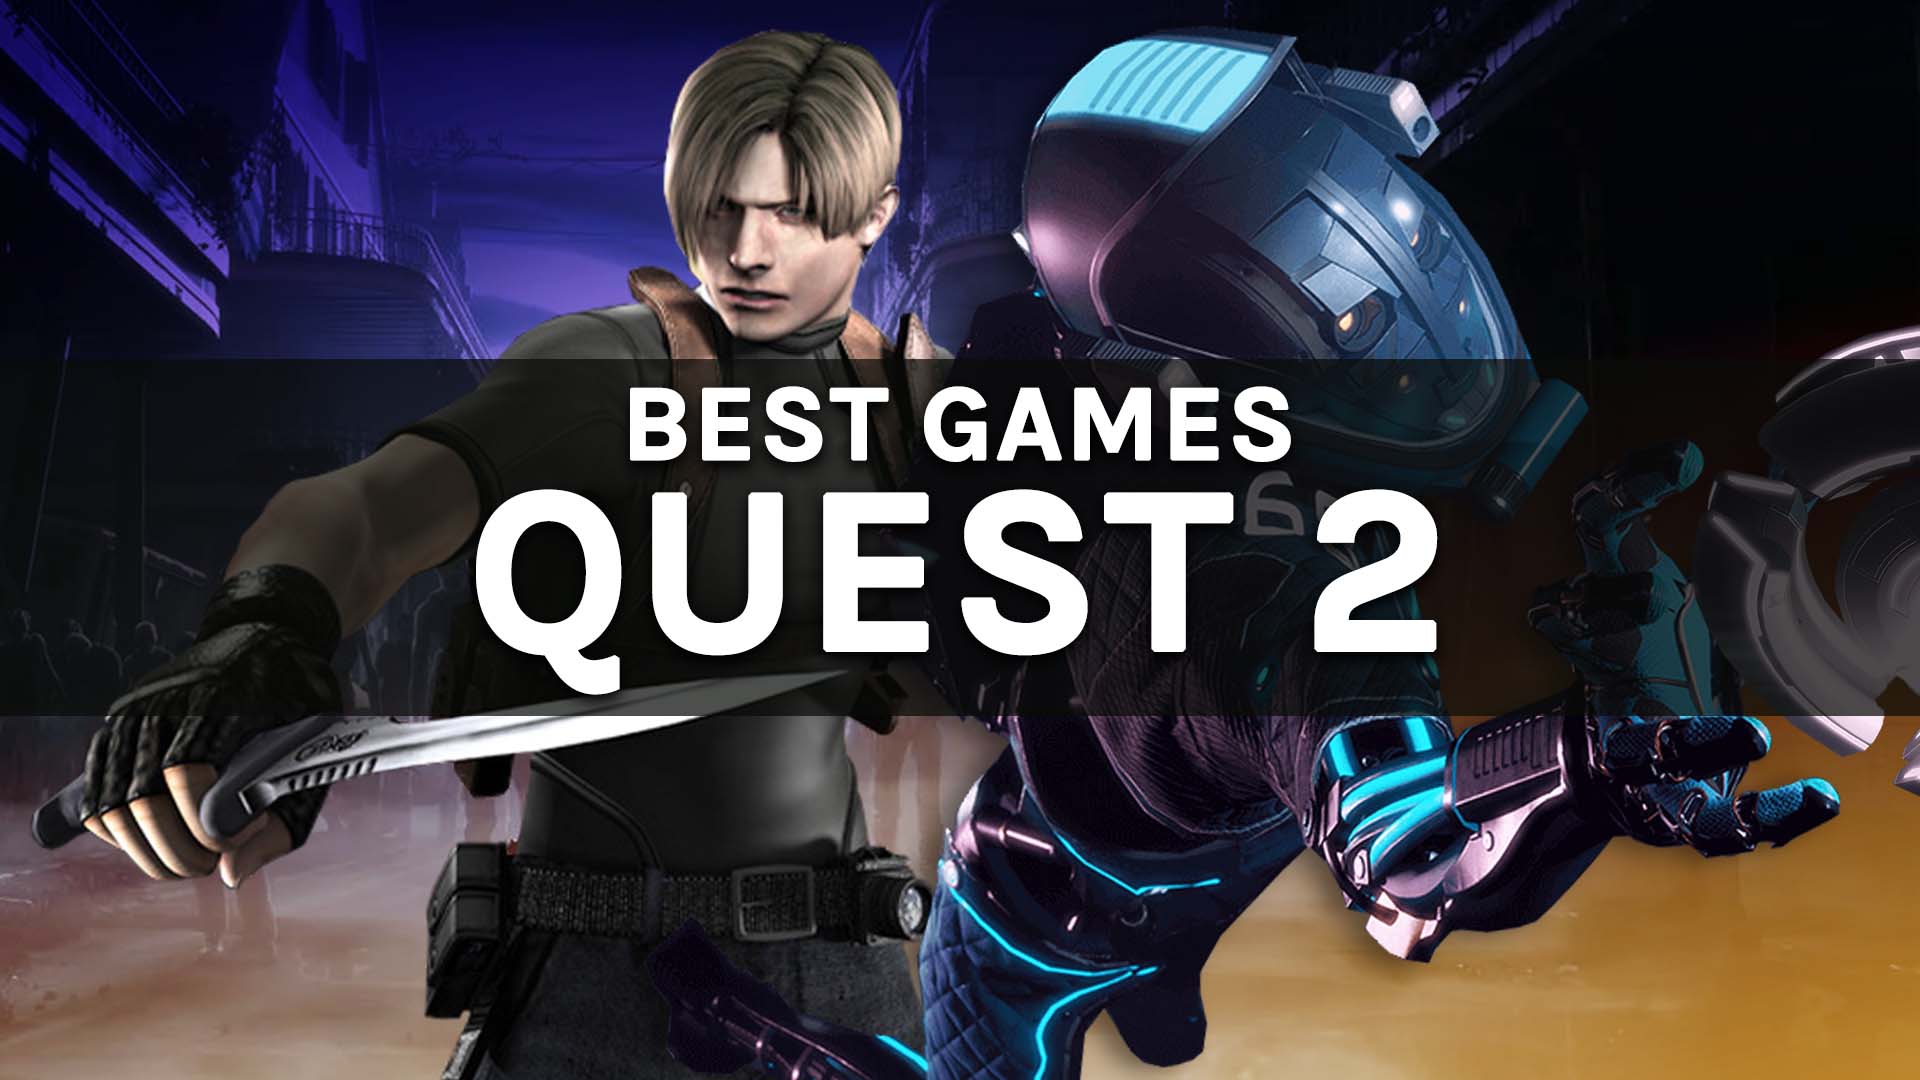 Oculus Quest 2 games. Best games for Oculus Quest 2. Pico 4 VR games. Until you Fall Oculus Quest 2. Vr игры для pico 4